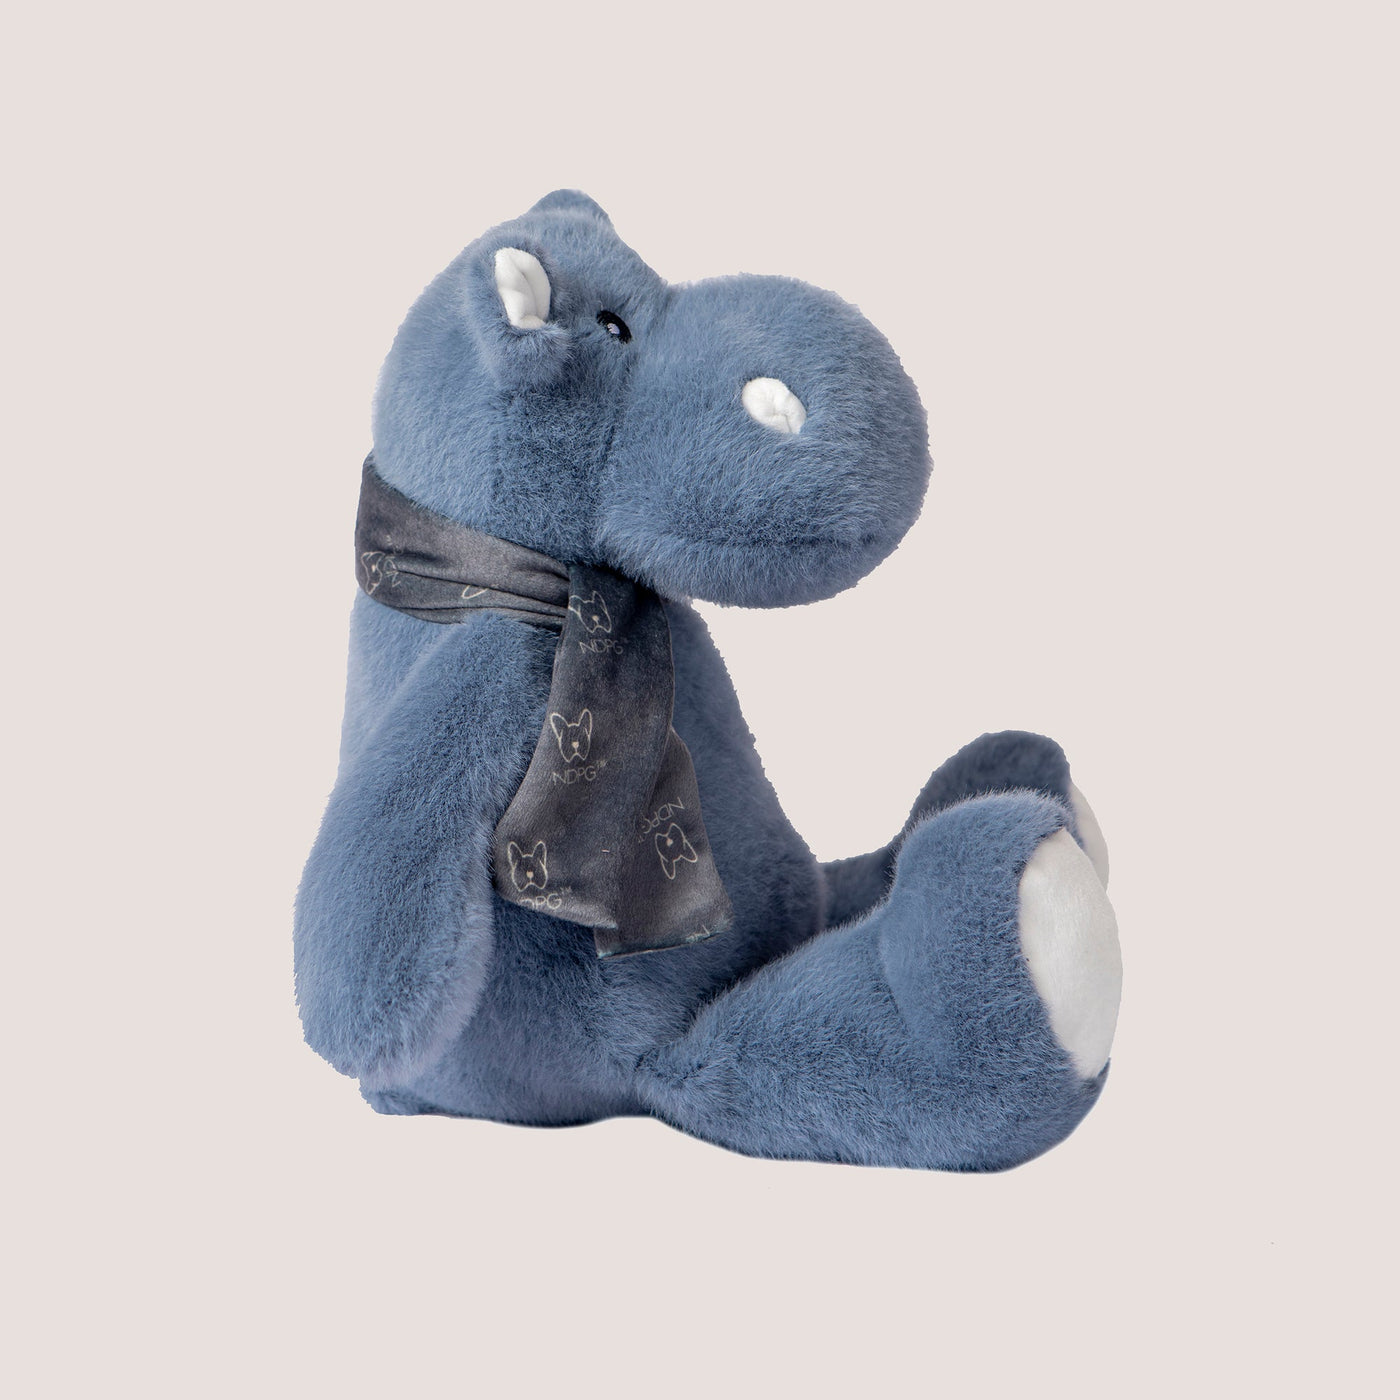 Blue Hippo Dog Toy